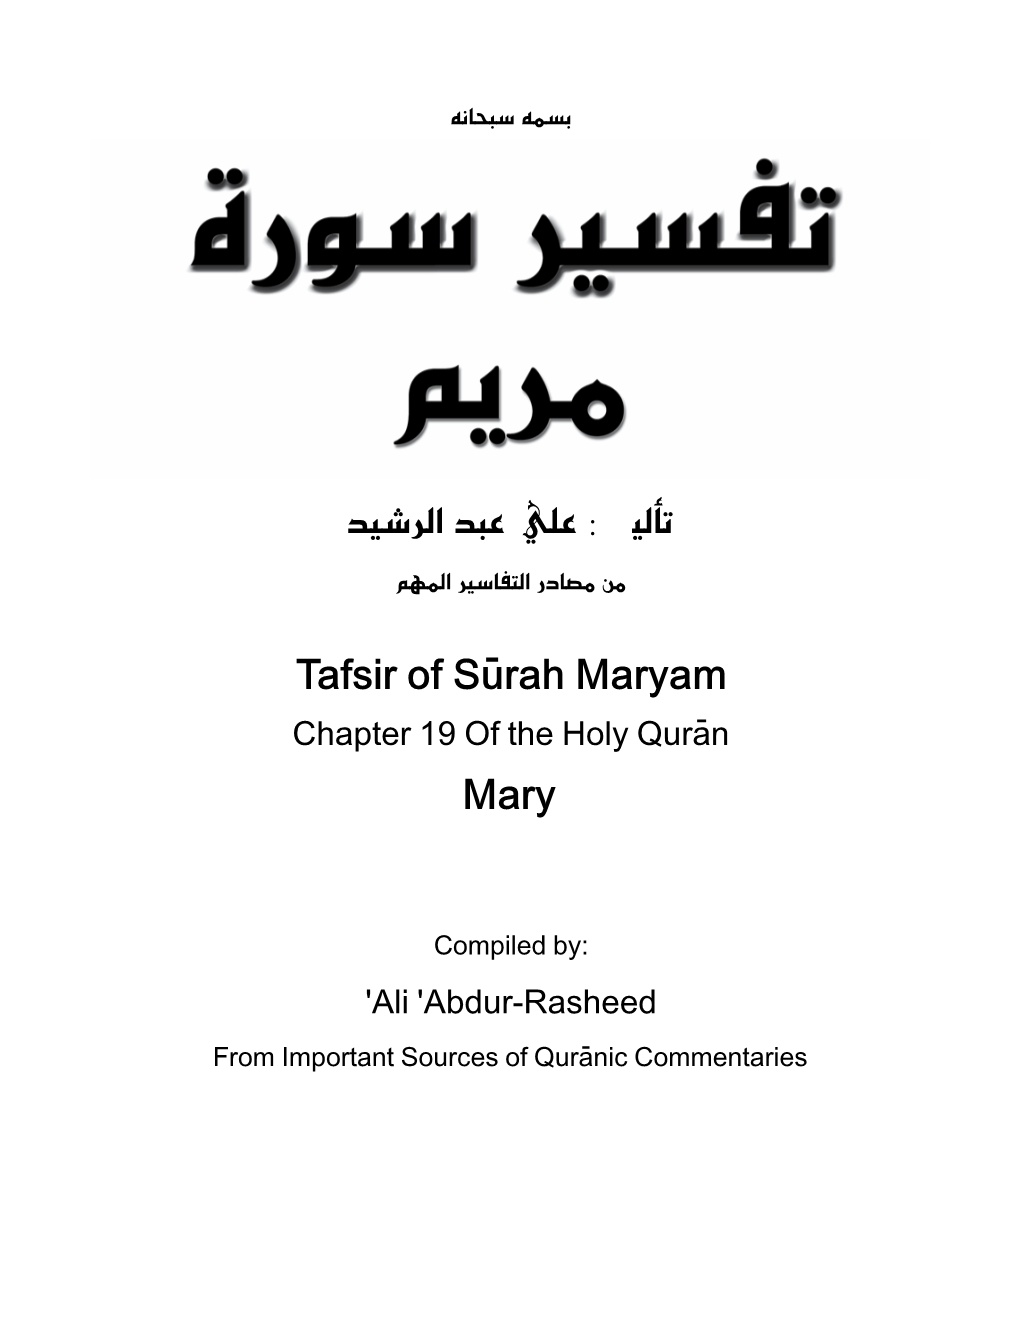 Tafsir of Surah Mary